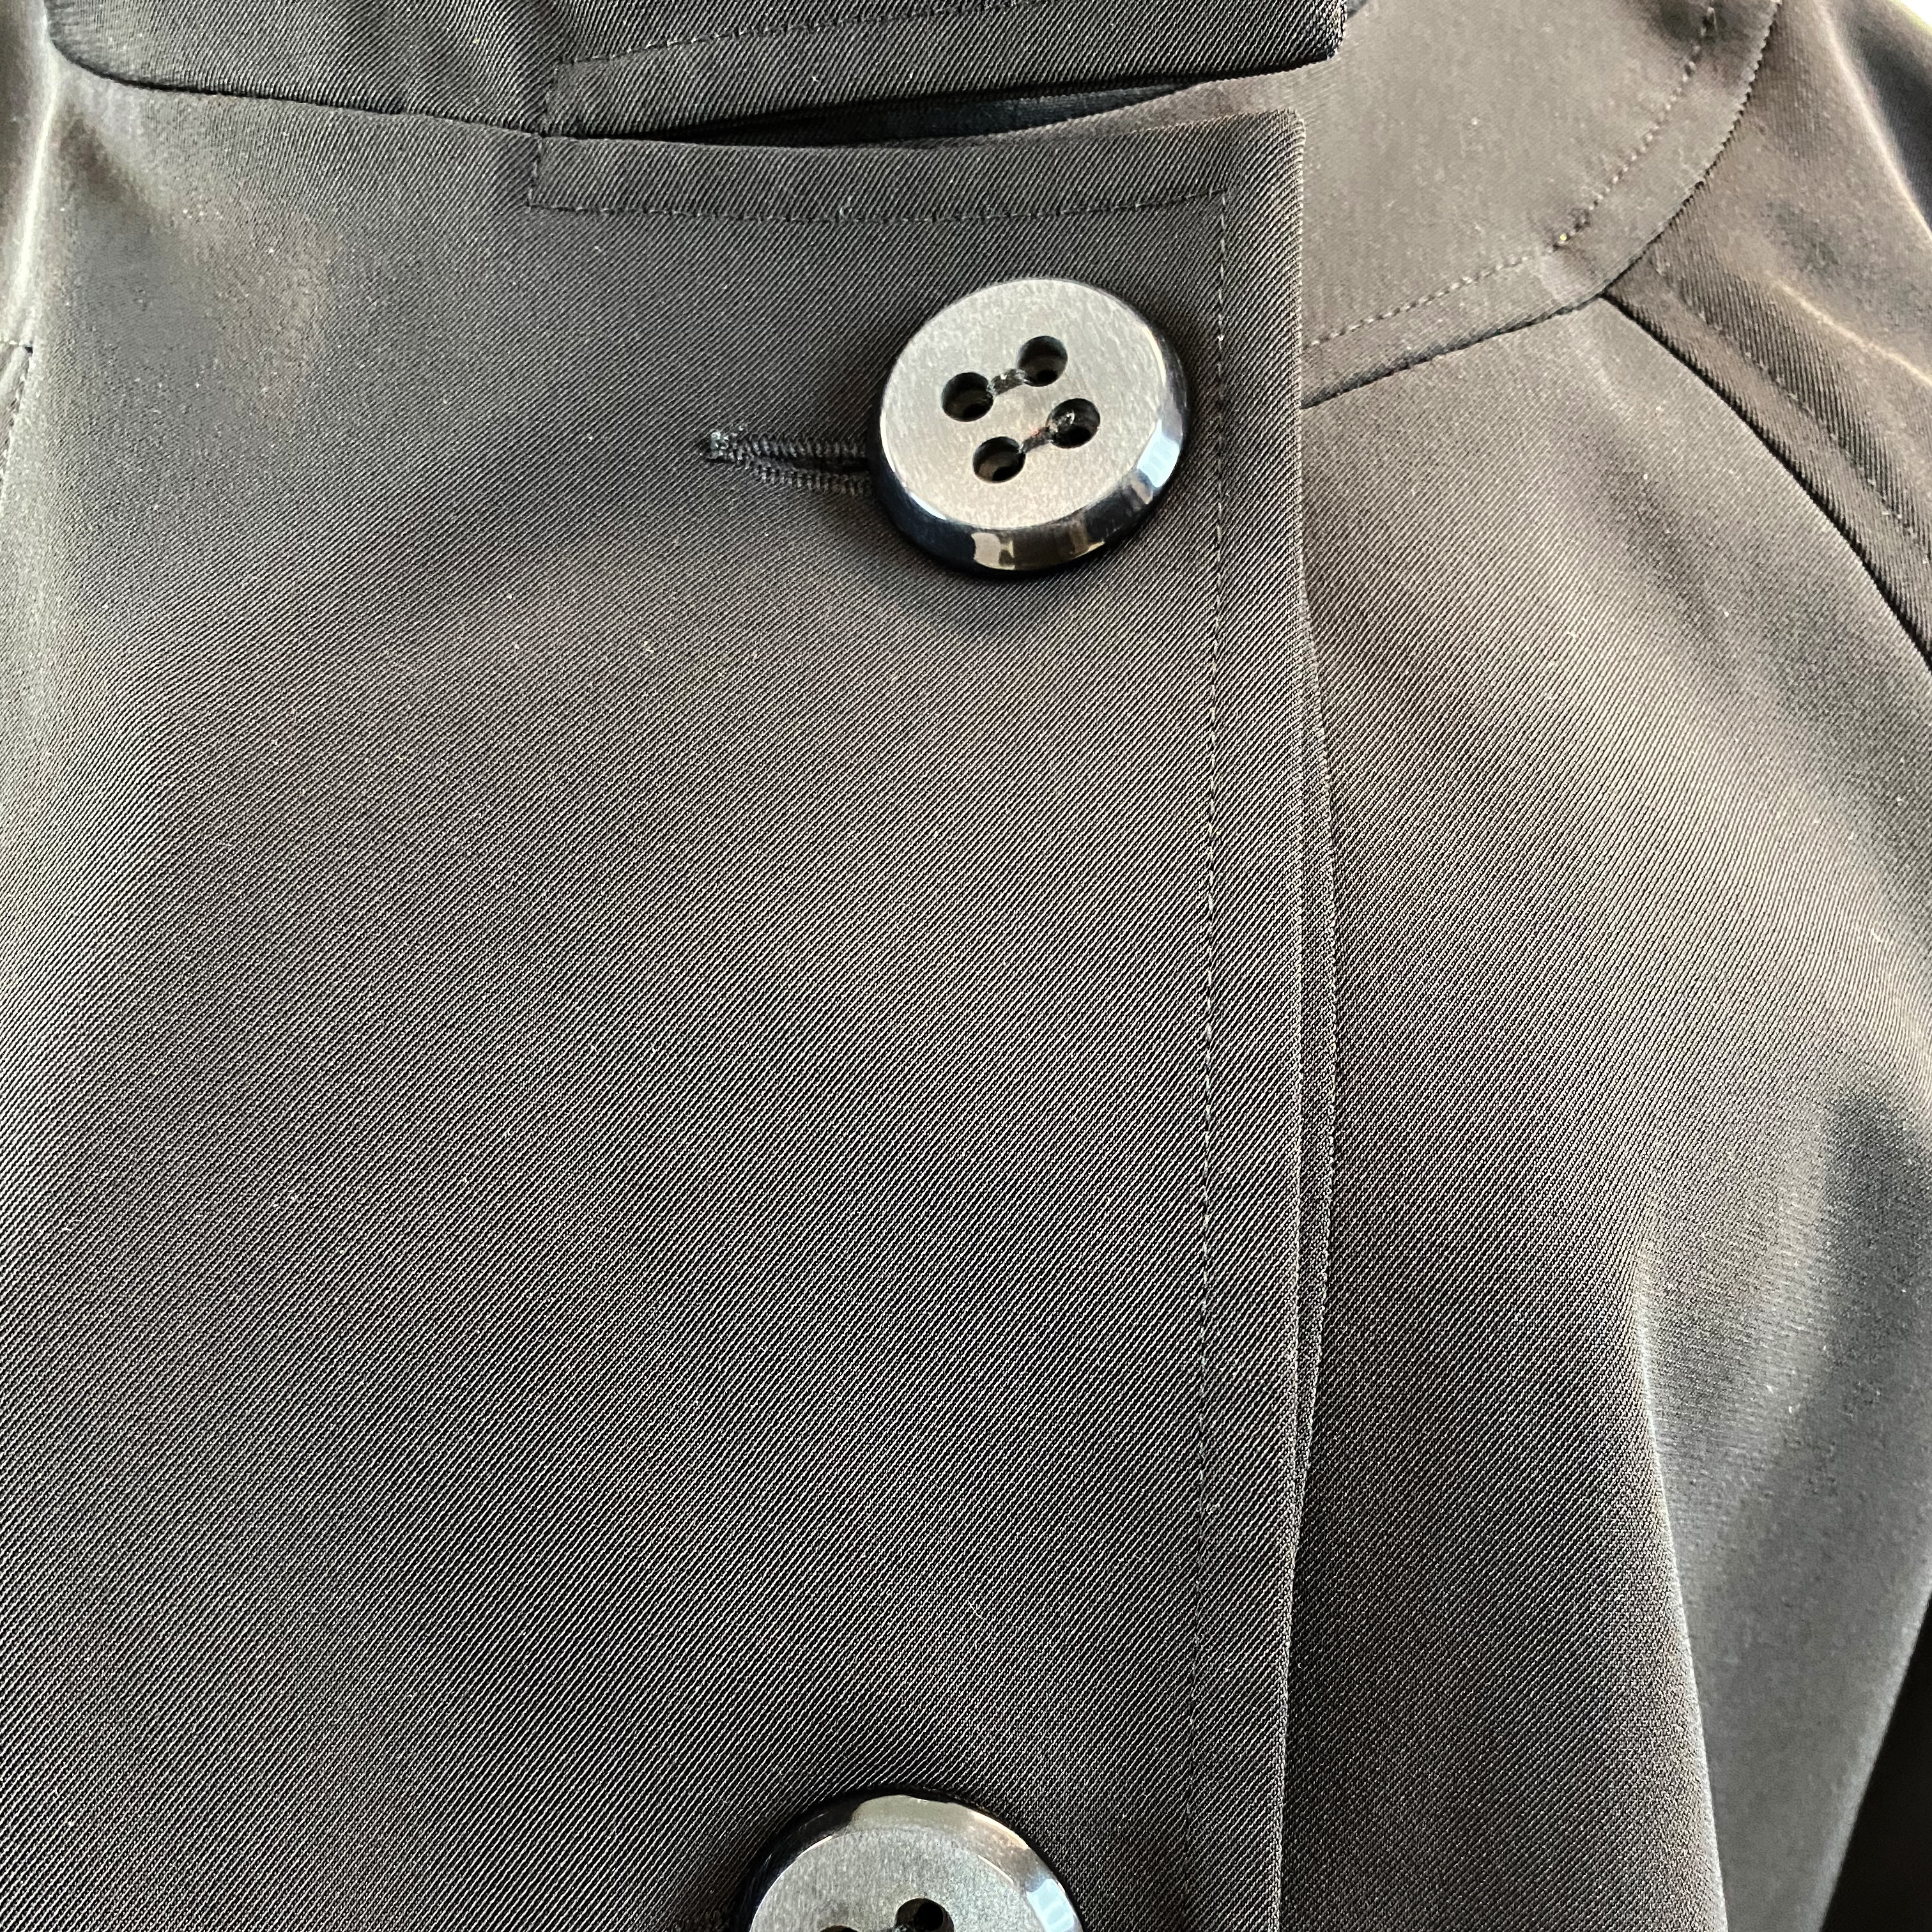 Vintage Feathers Black Button-Up Ladies' Jacket